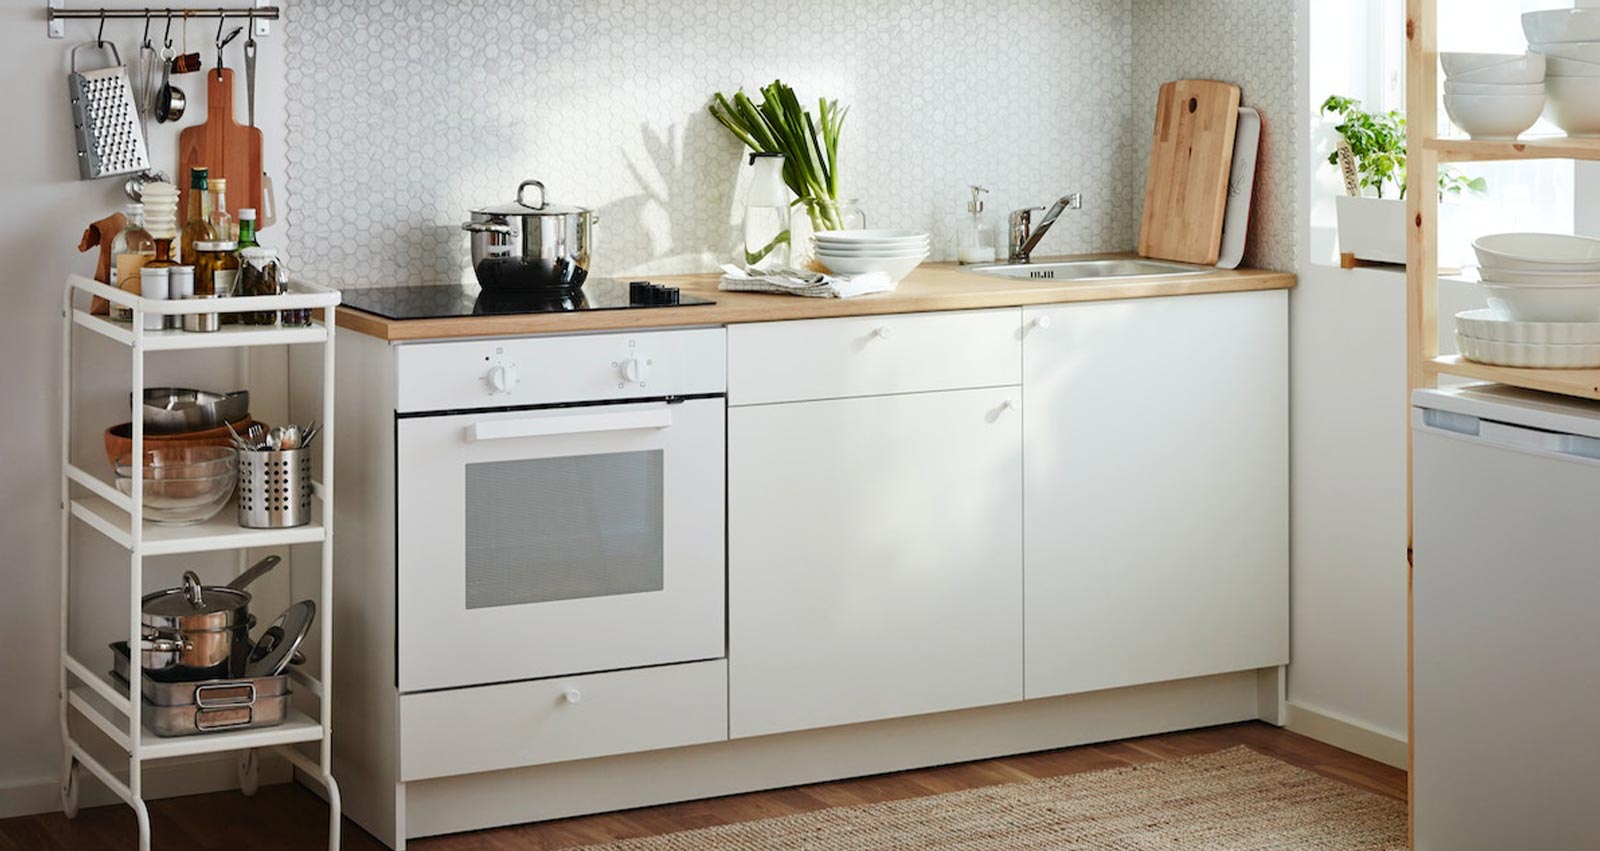 A fun, youthful kitchen in a multifunctional studio - IKEA